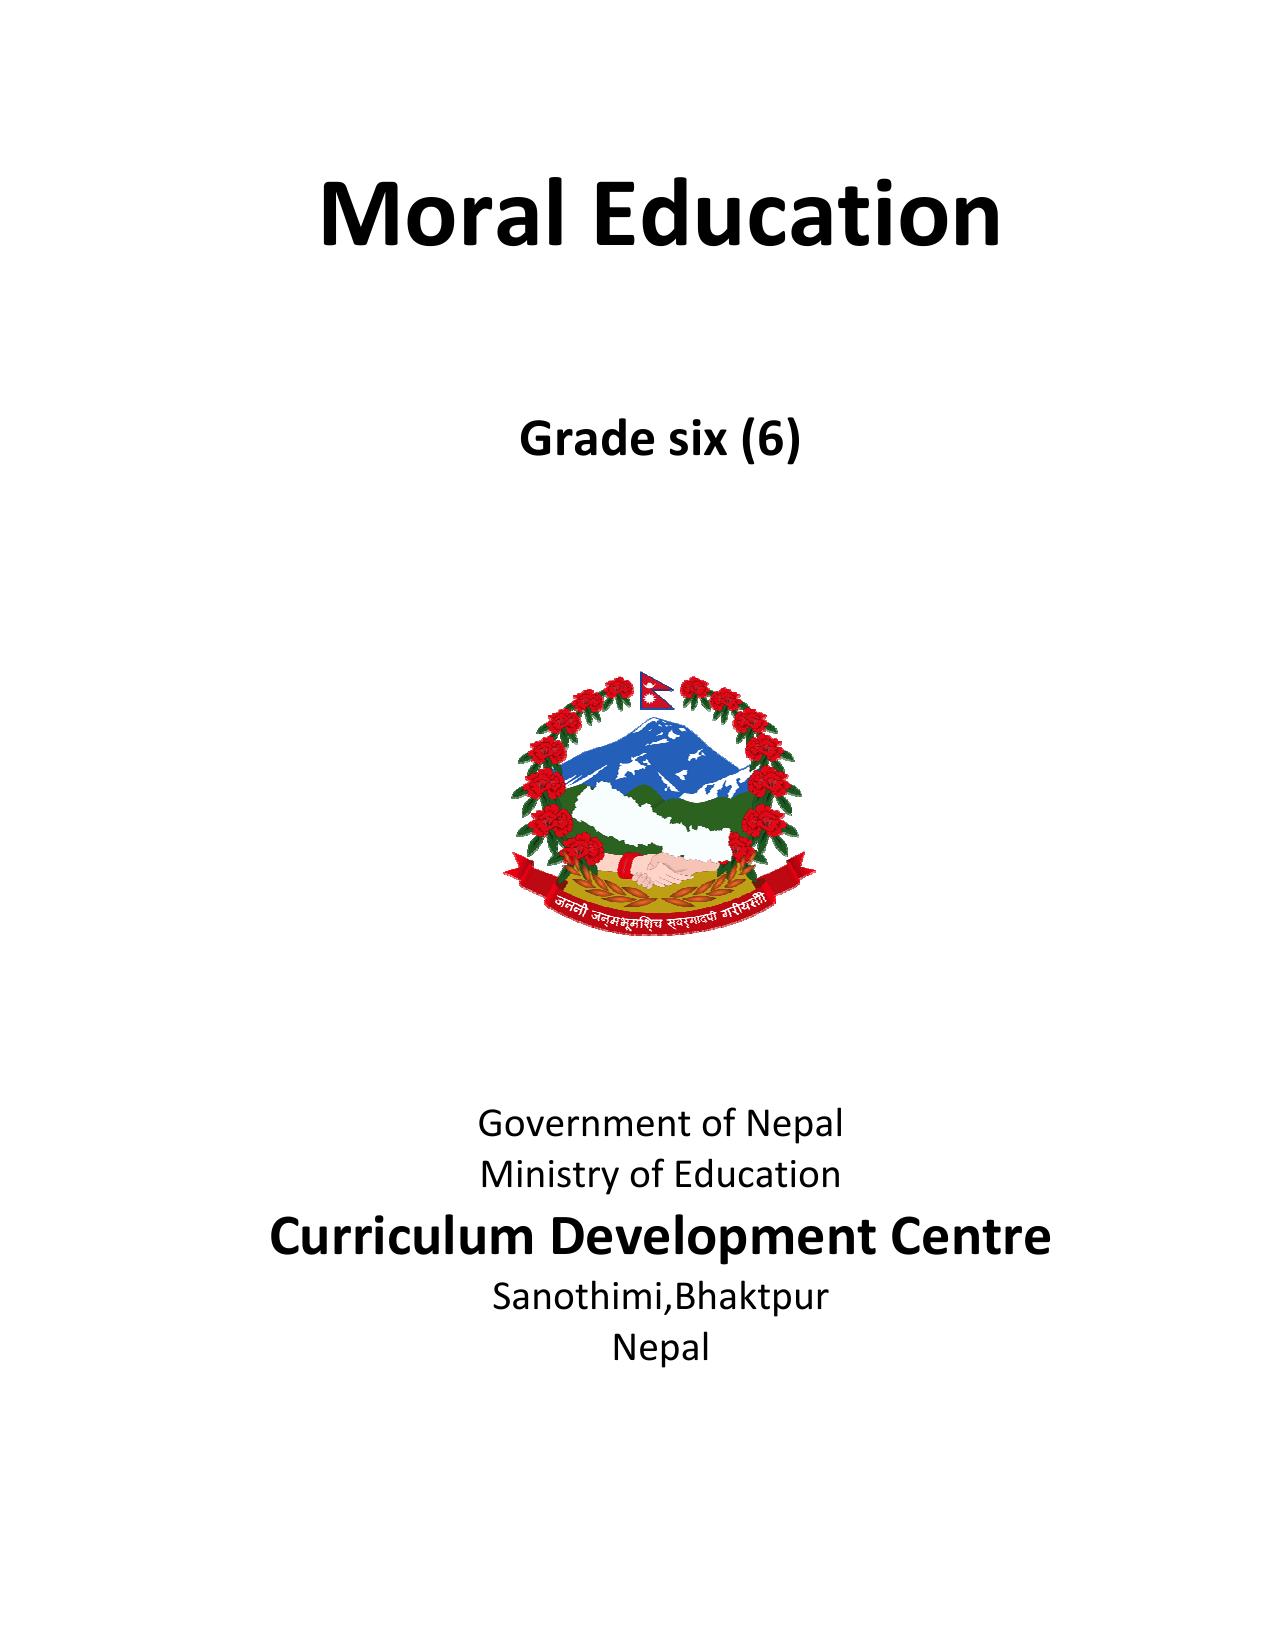 CDC 2018 - Moral Education Grade 6